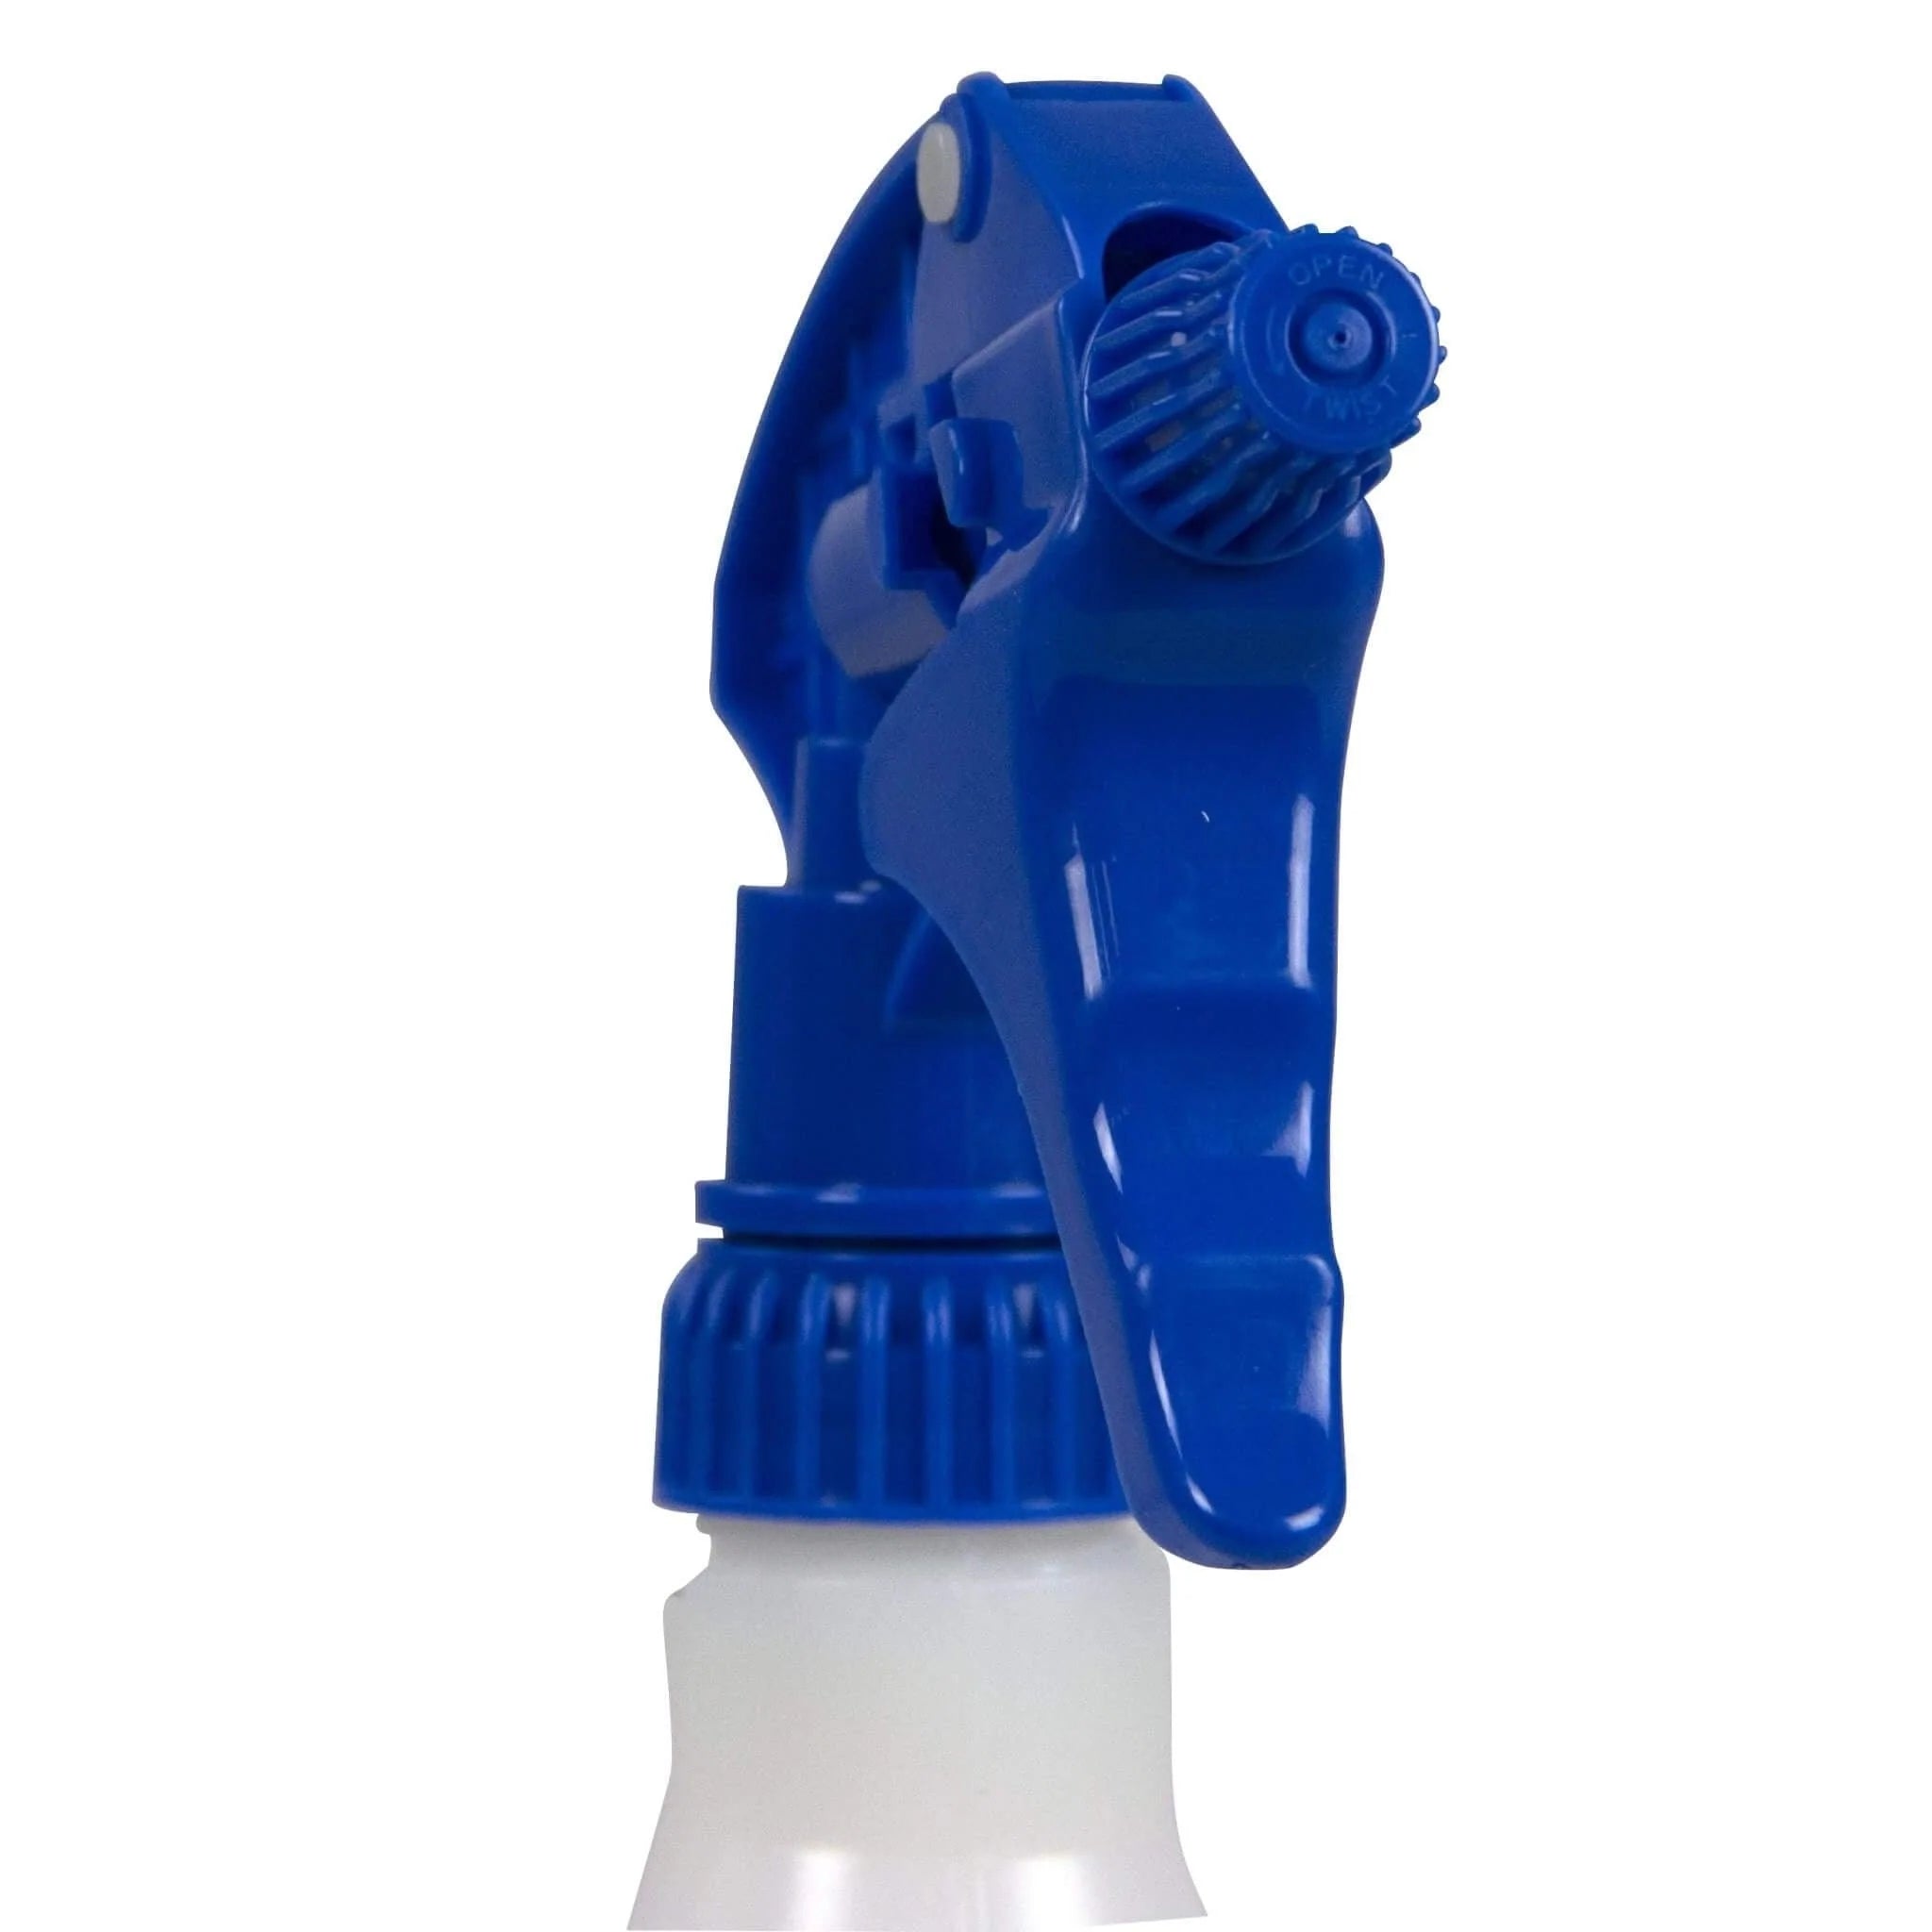 ACC_135 - The Duck Foaming Trigger Sprayer & Bottle (32 oz